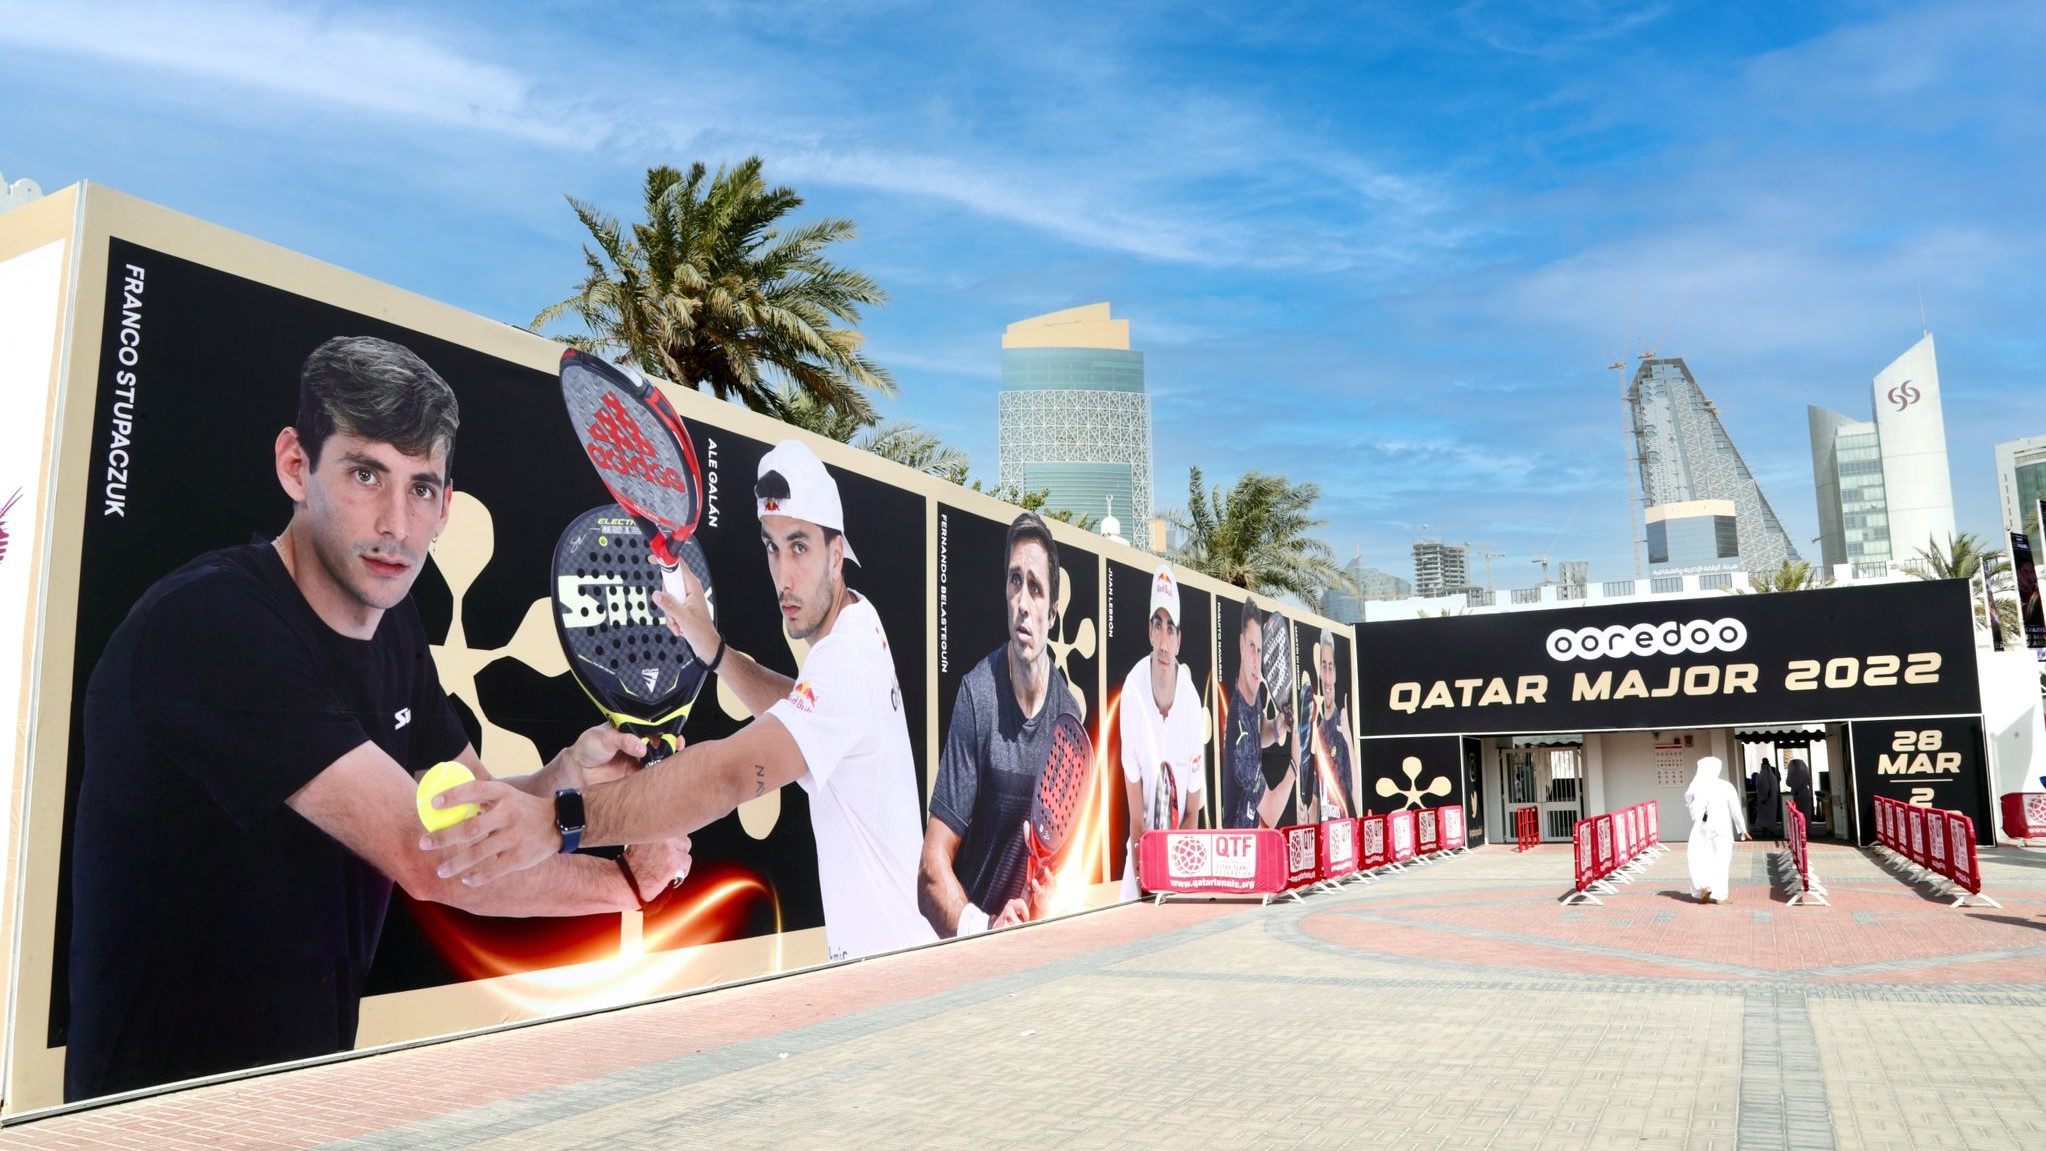 Panorama ooredoo qatar mayor 2022 premier padel